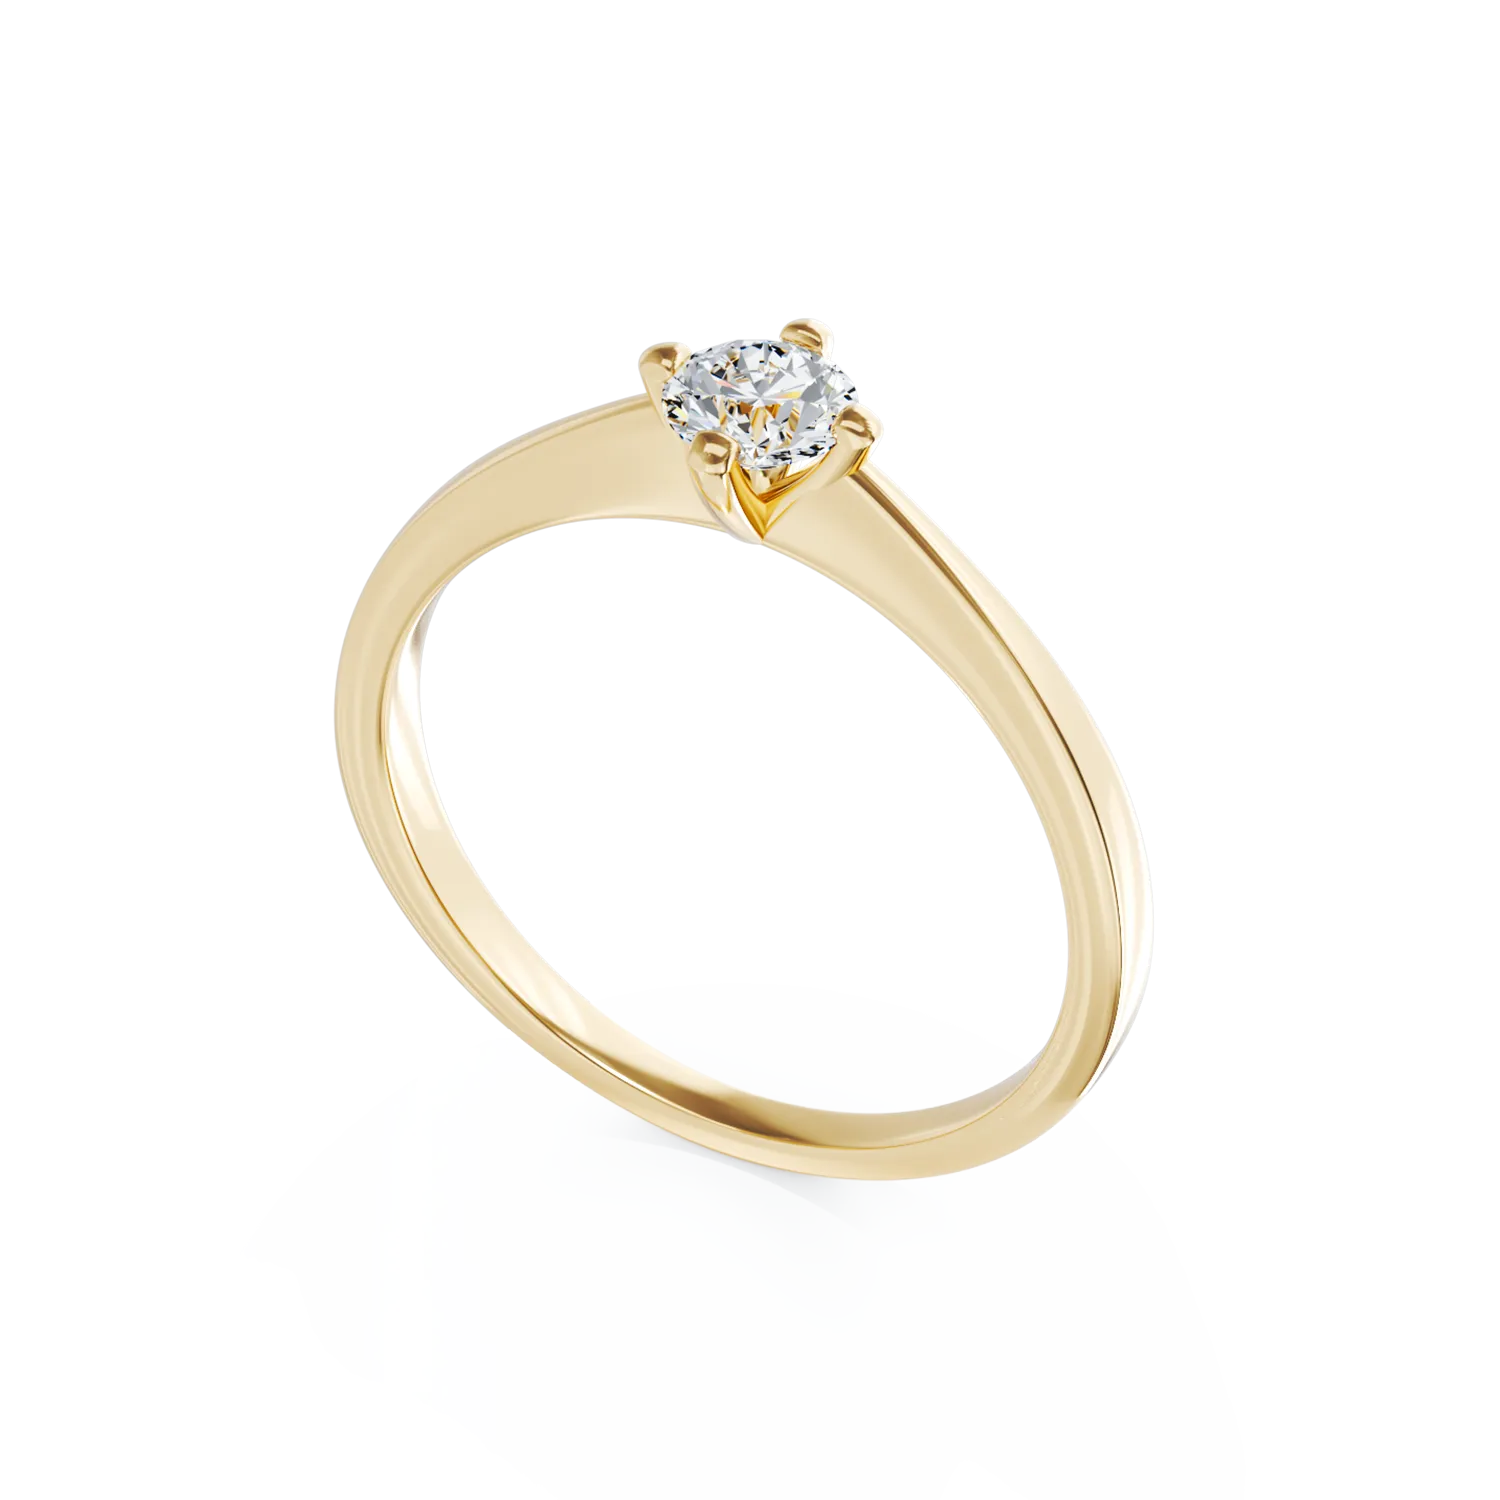 Inel de logodna din aur galben de 18K cu un diamant solitaire de 0.305ct